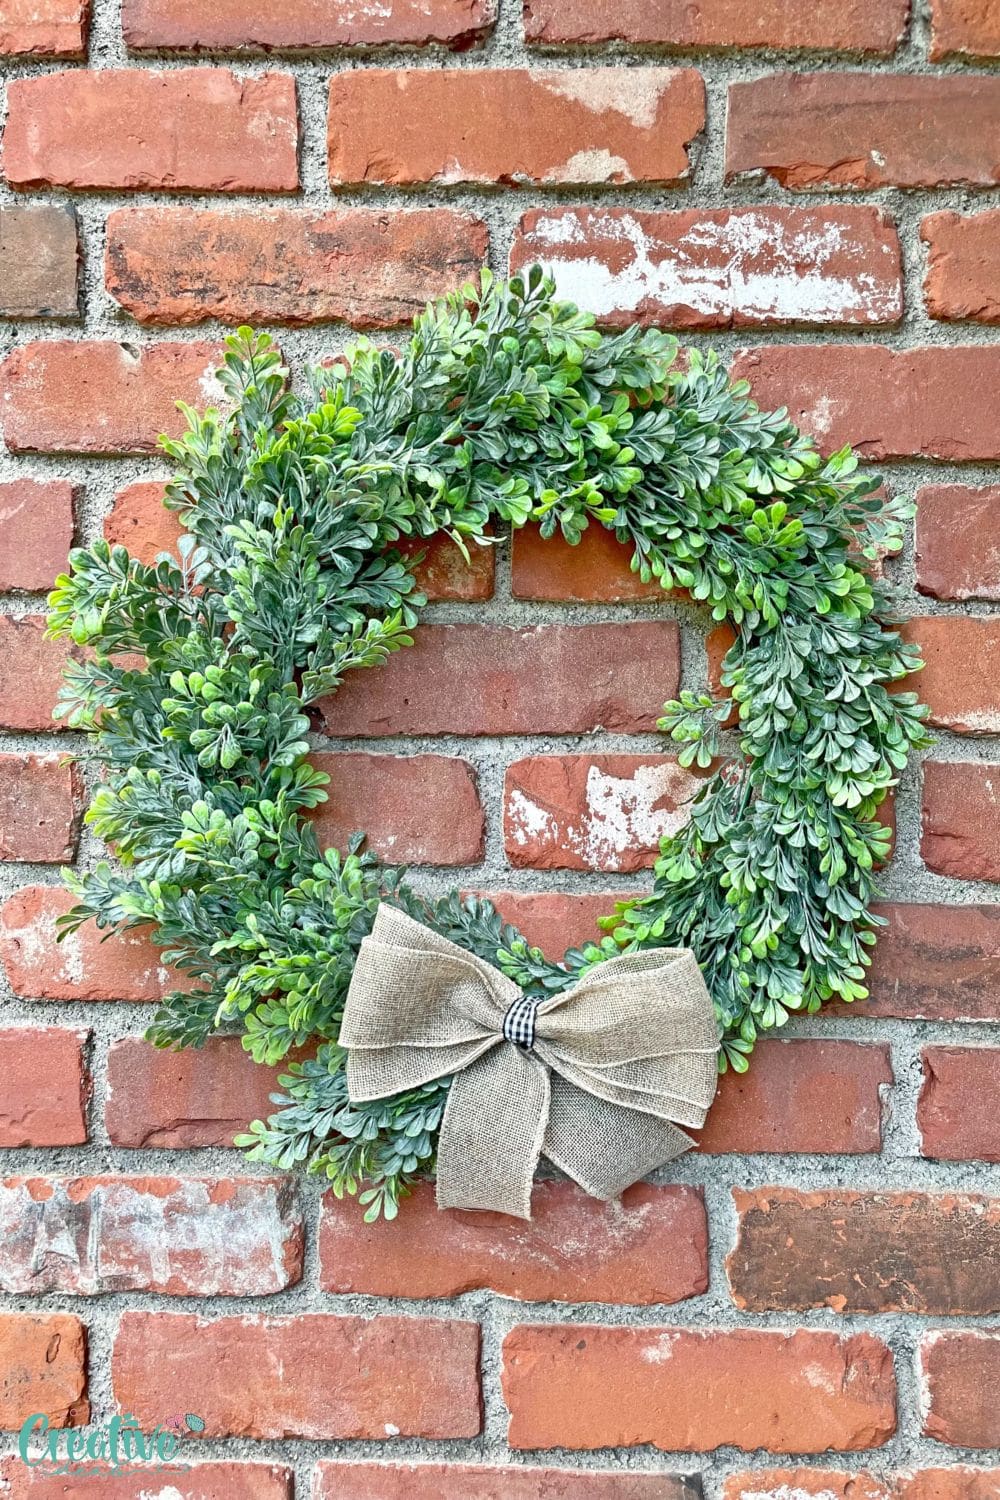 How to make a cheap and cute DIY Christmas wreath